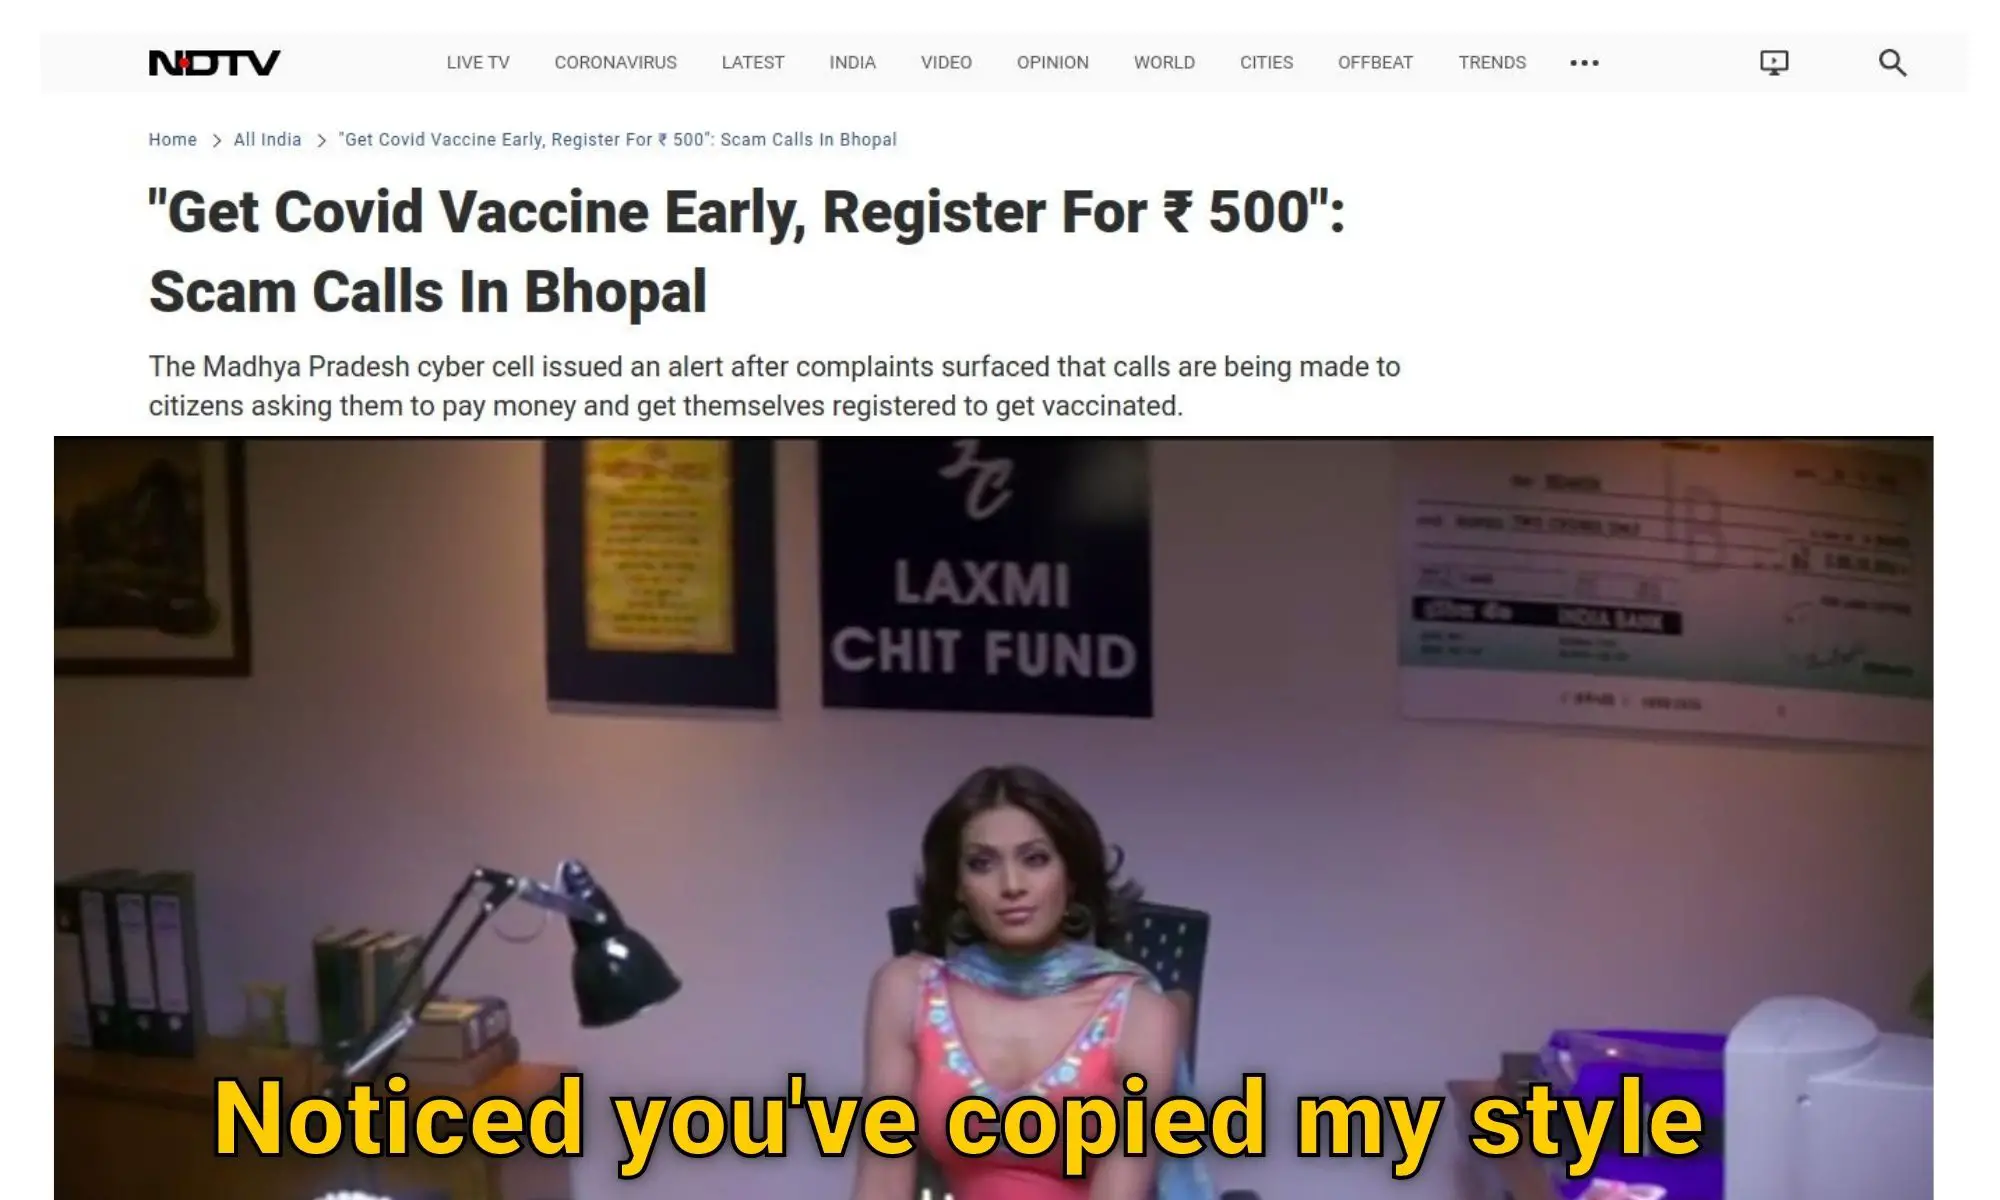 Laxmi Chit Fund Meme on vaccine scam